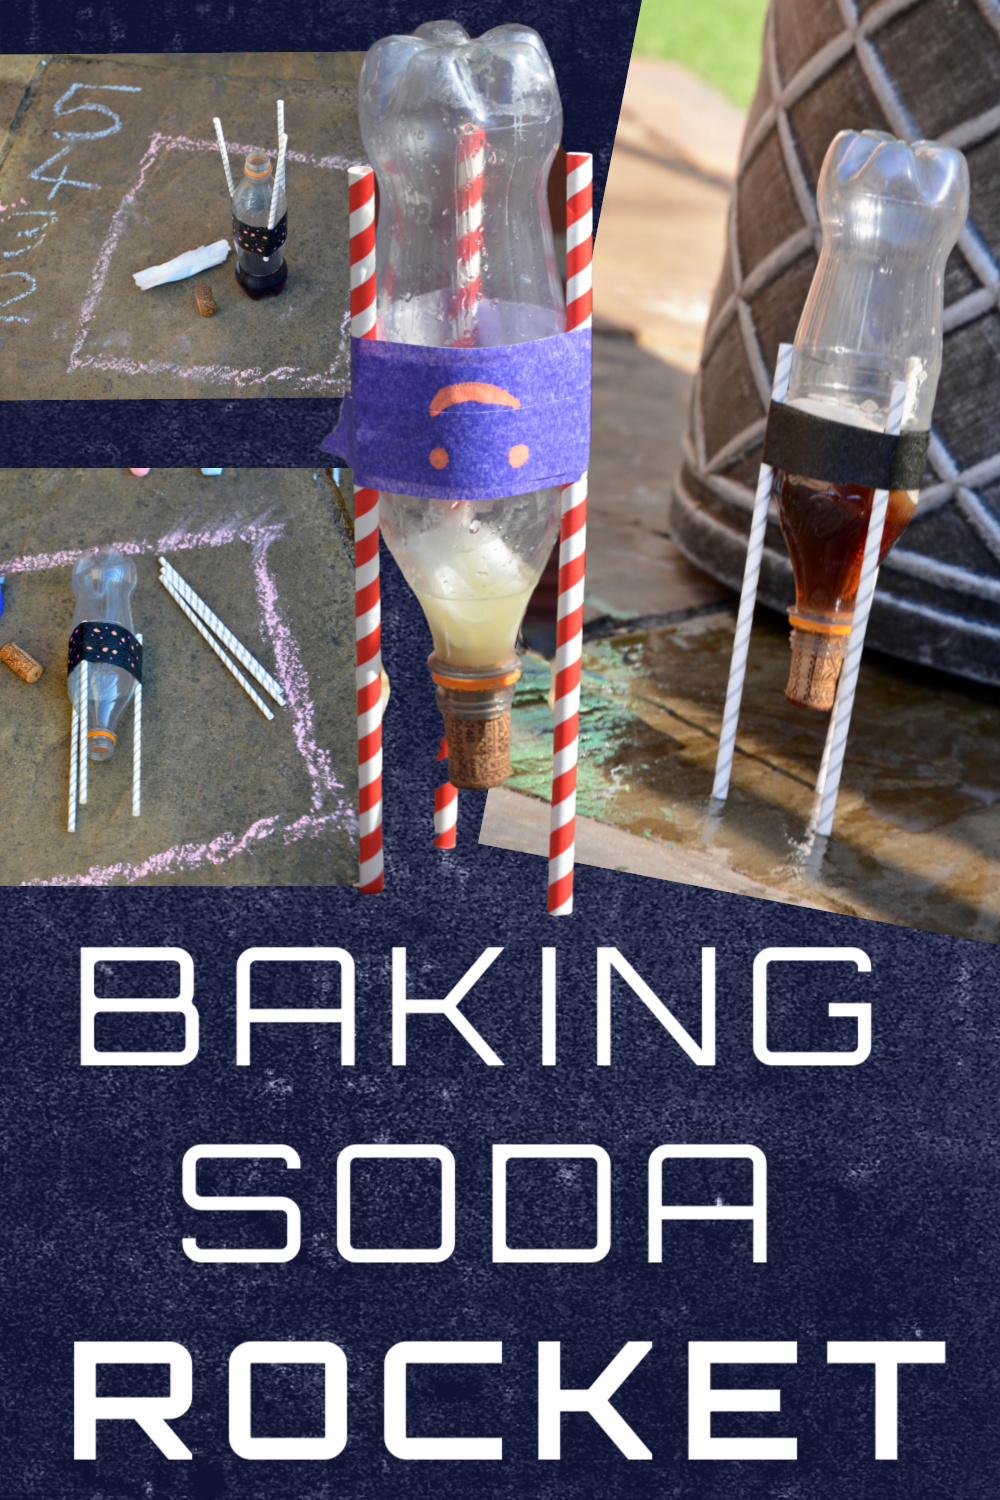 baking soda and vinegar rocket car